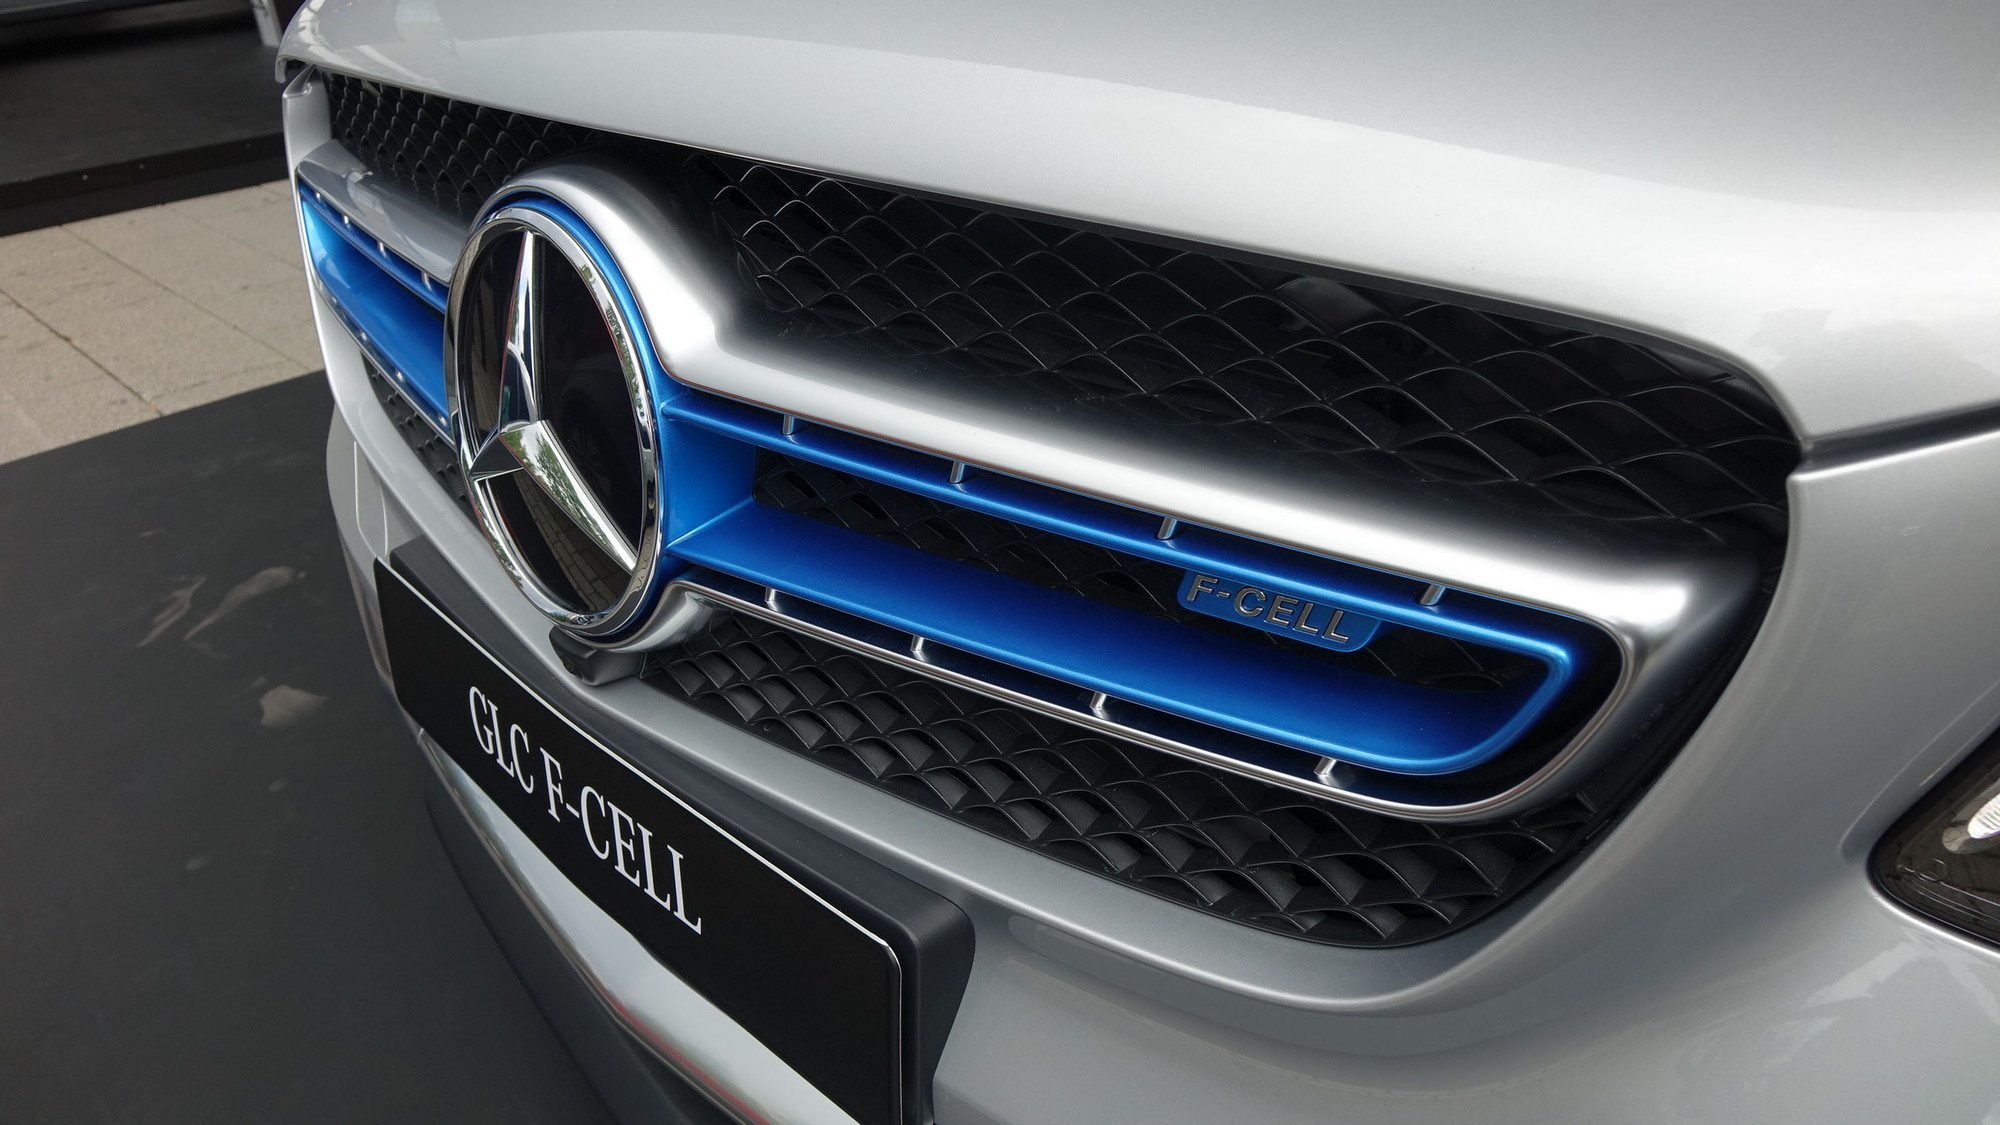 Mercedes-Benz GLC F-Cell, 2017 Frankfurt Motor Show